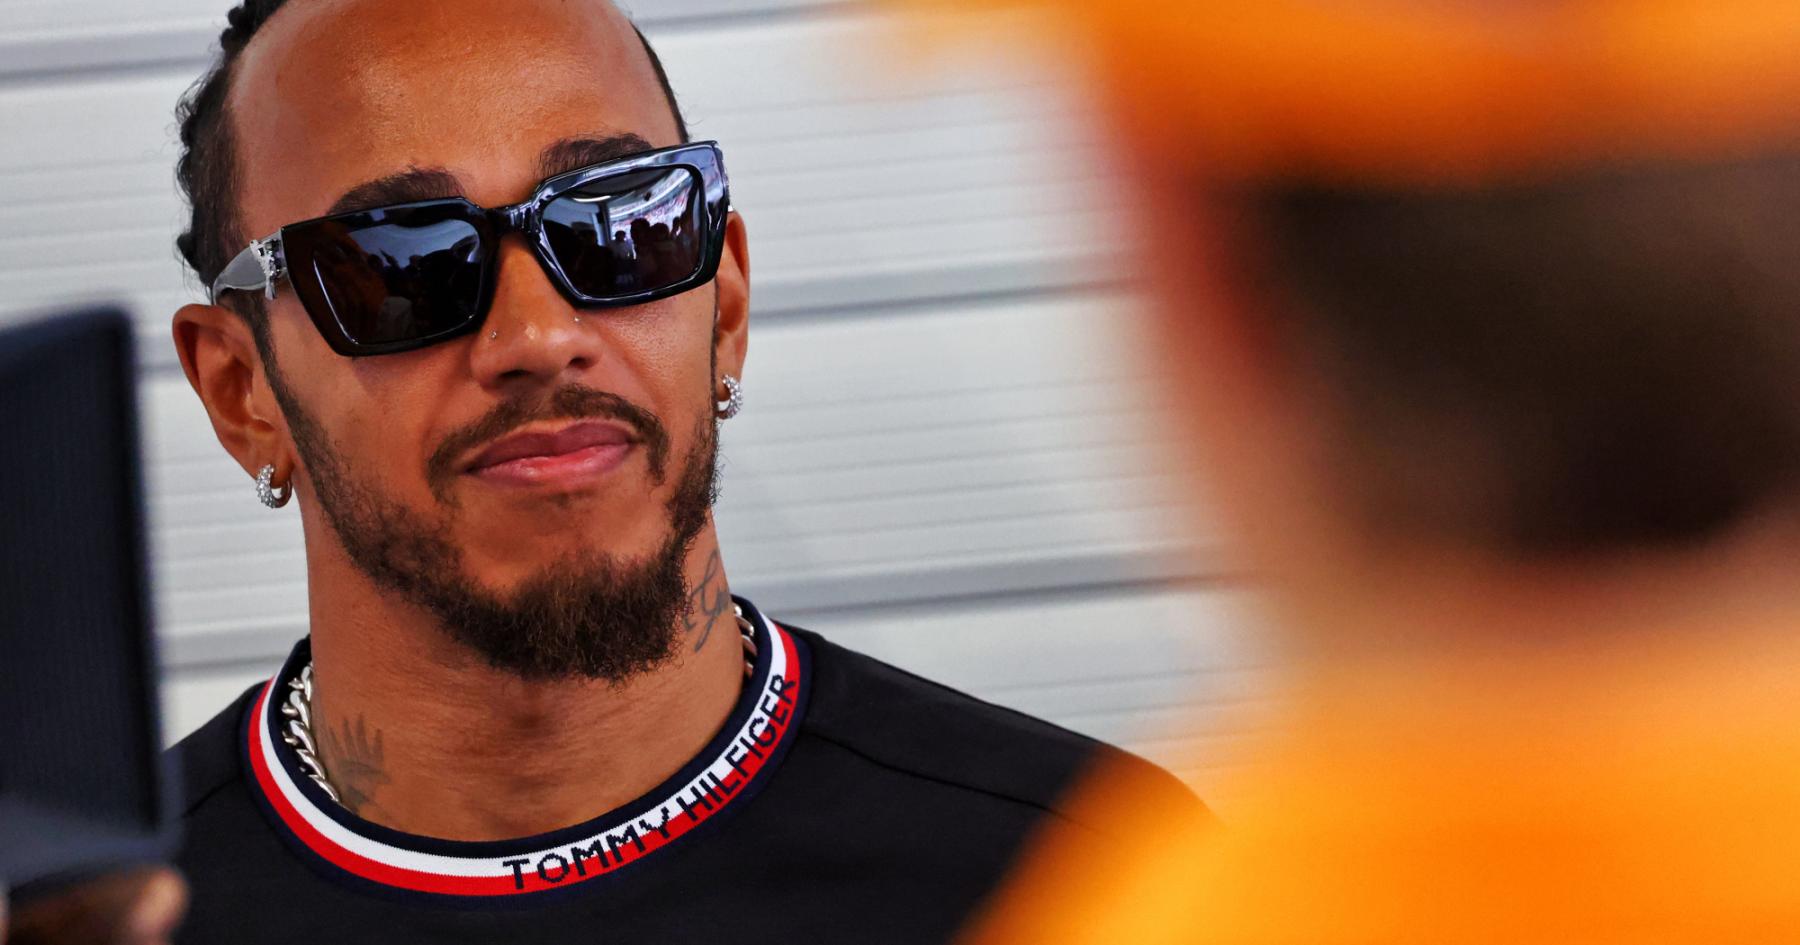 Hamilton Triumphantly Breaks Drought, Rewriting Formula 1 History Once Again